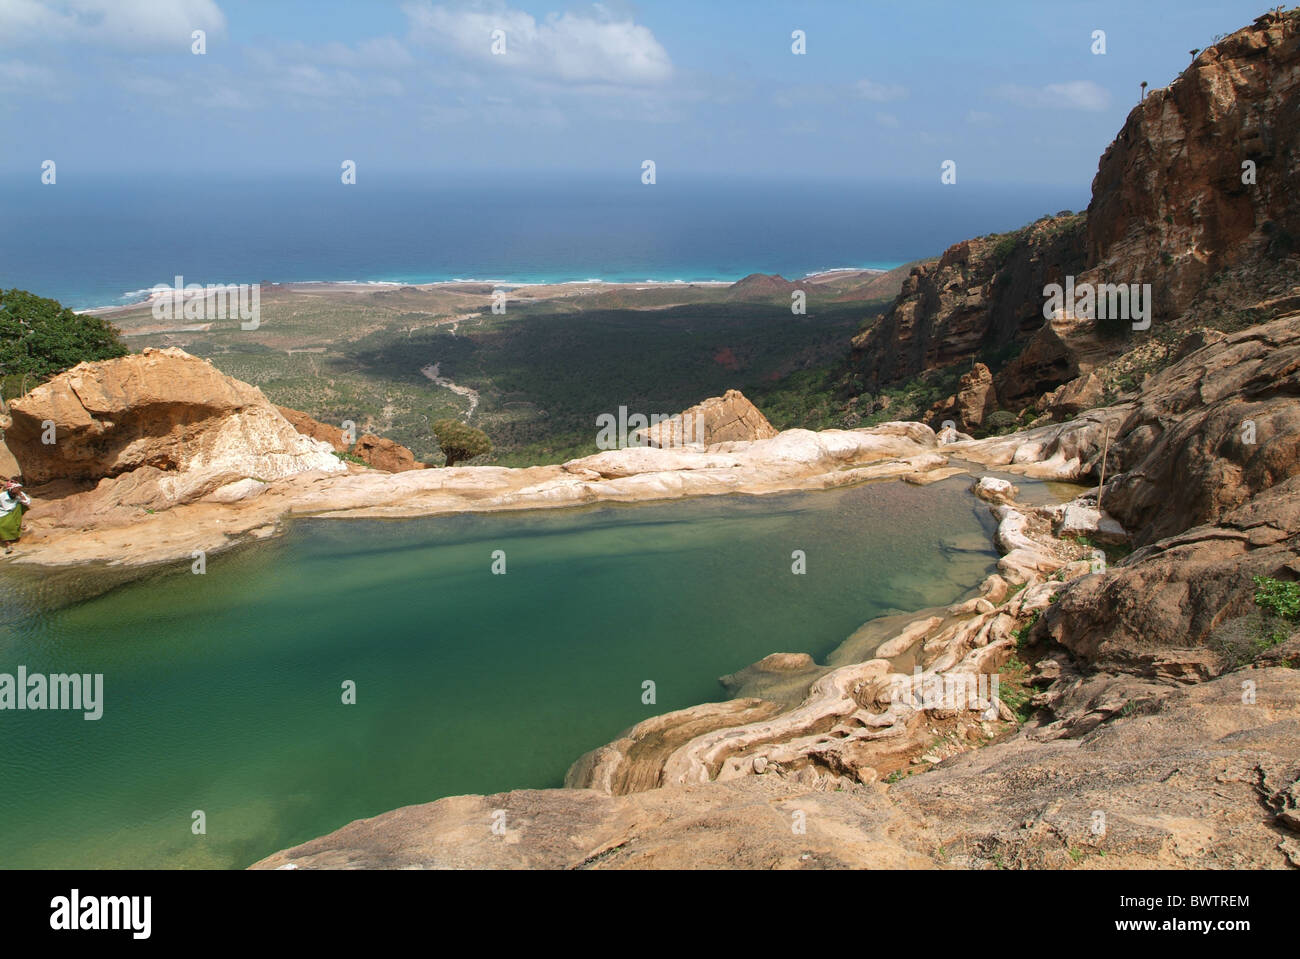 Yemen Socotra island Homhil protected area Arabic Arabian Arab travel UNESCO world natural heritage site Land Stock Photo